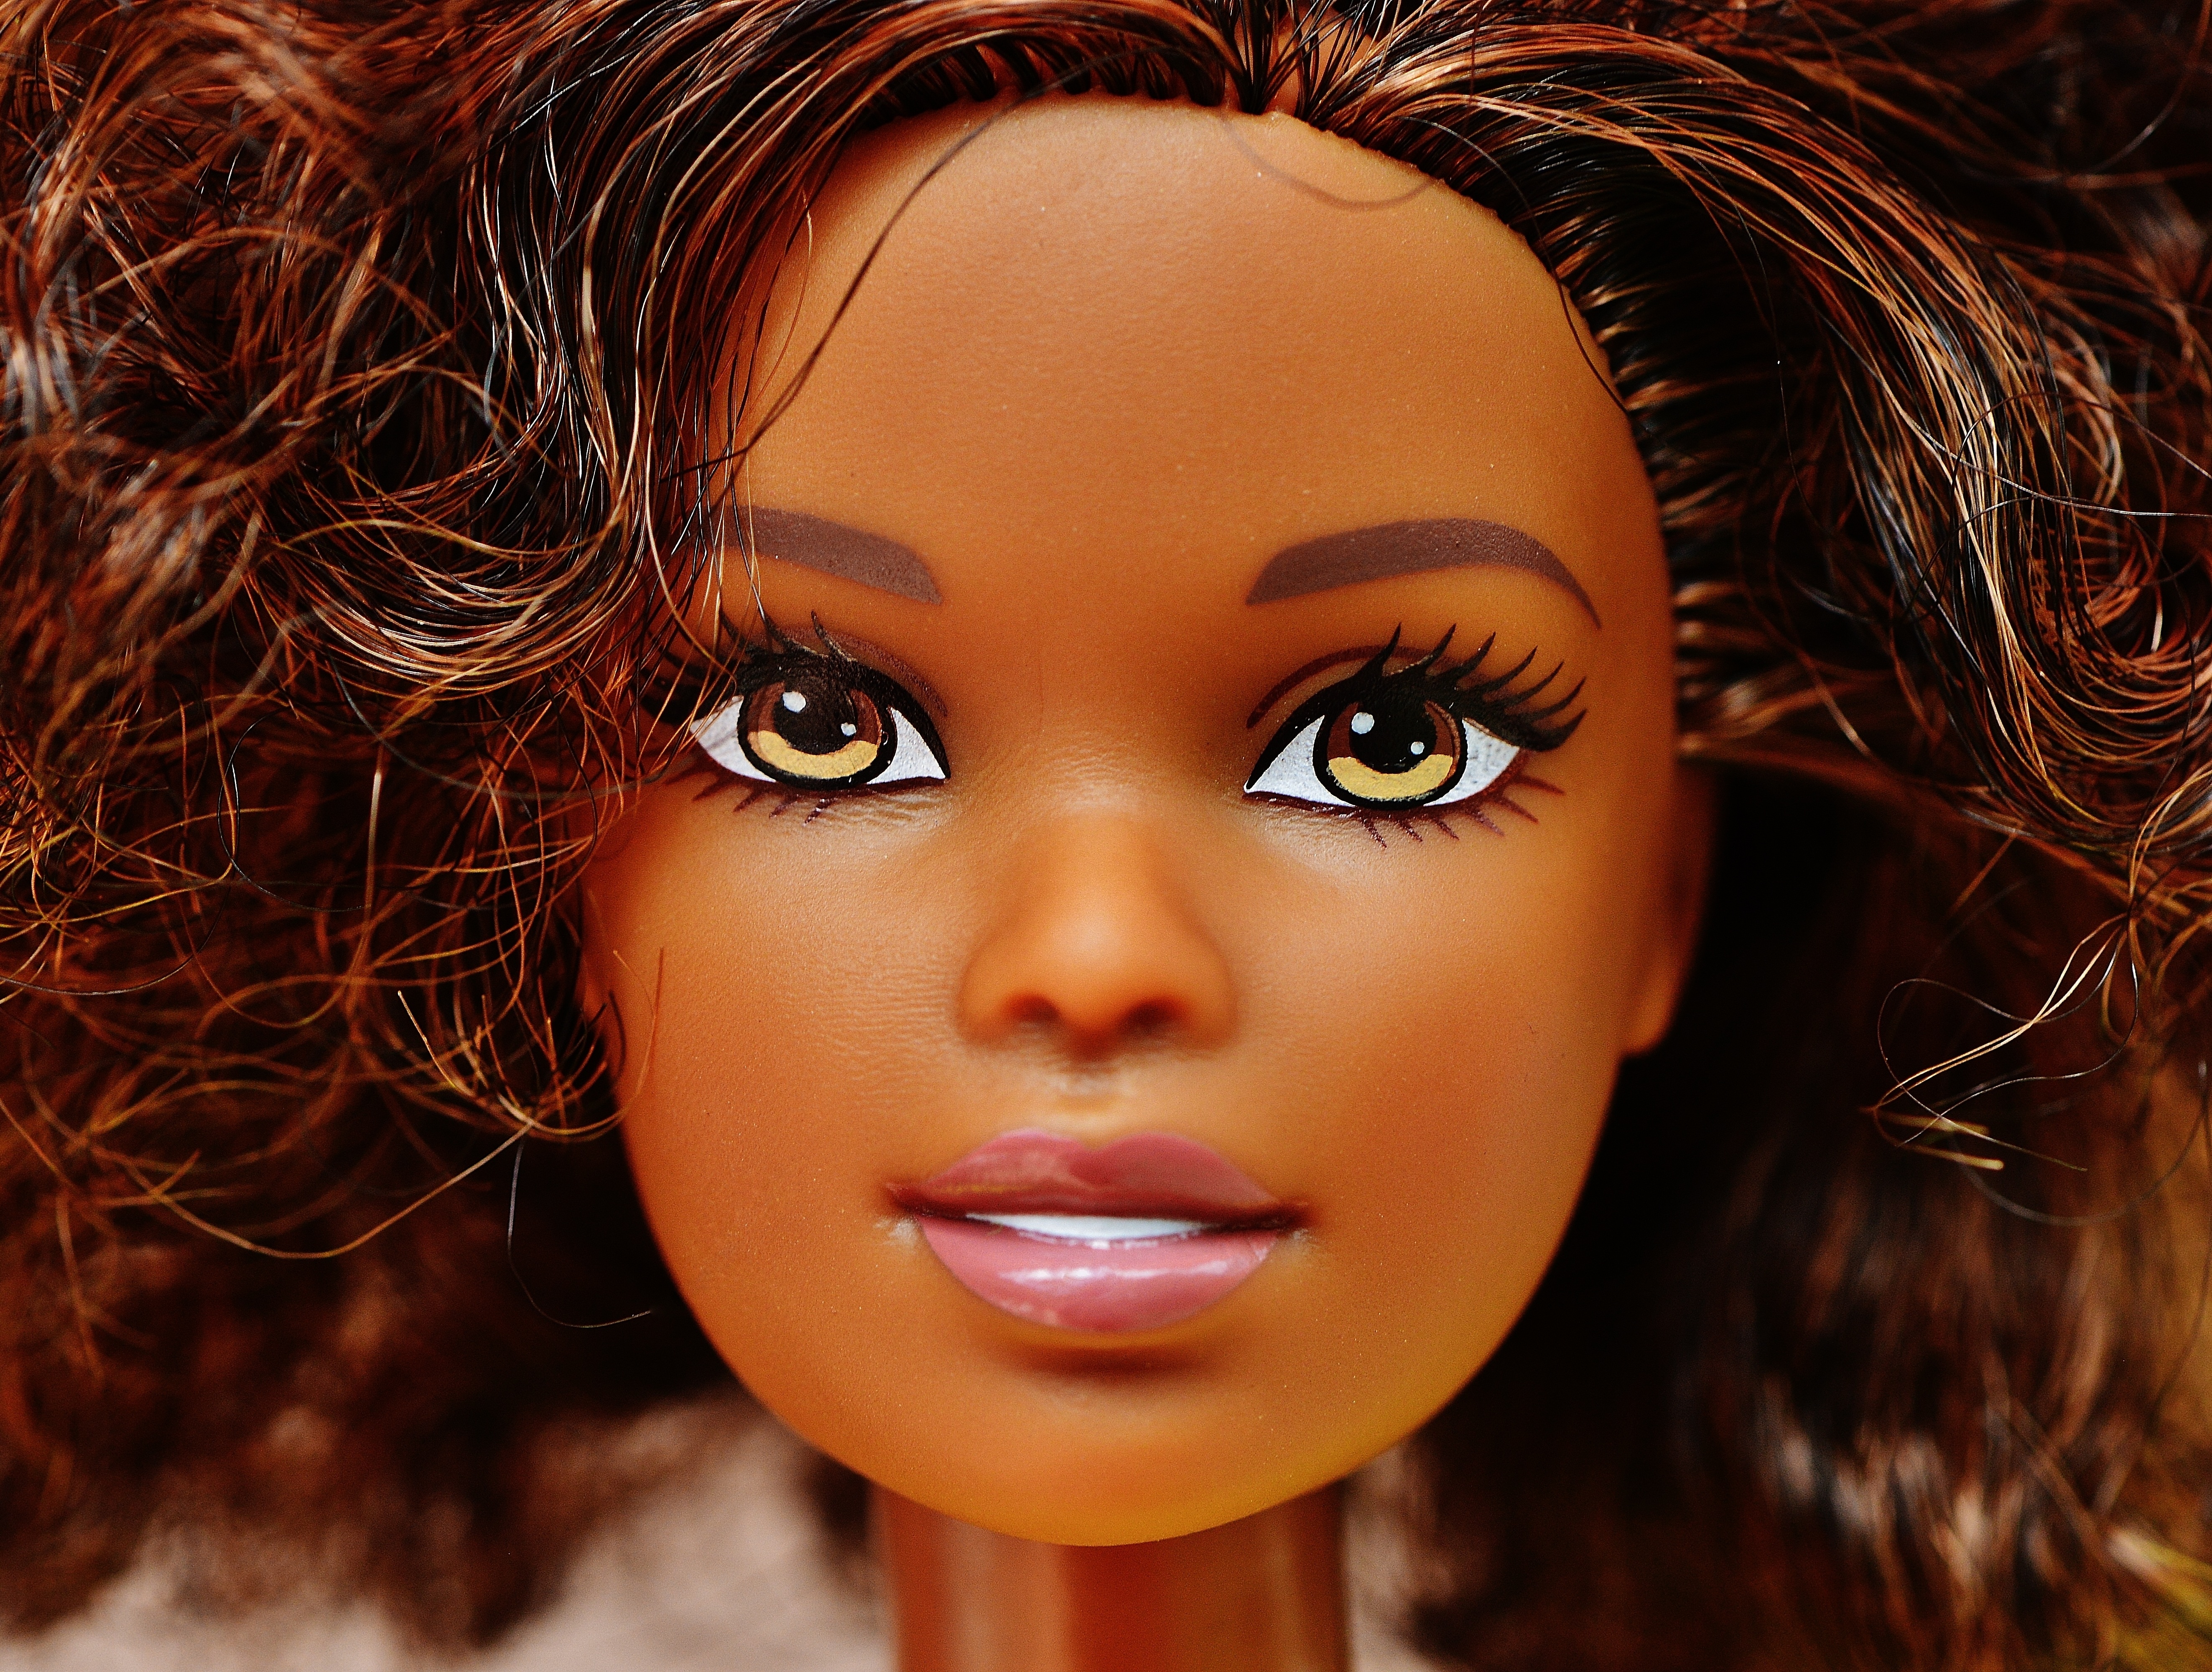 brown hair barbie doll